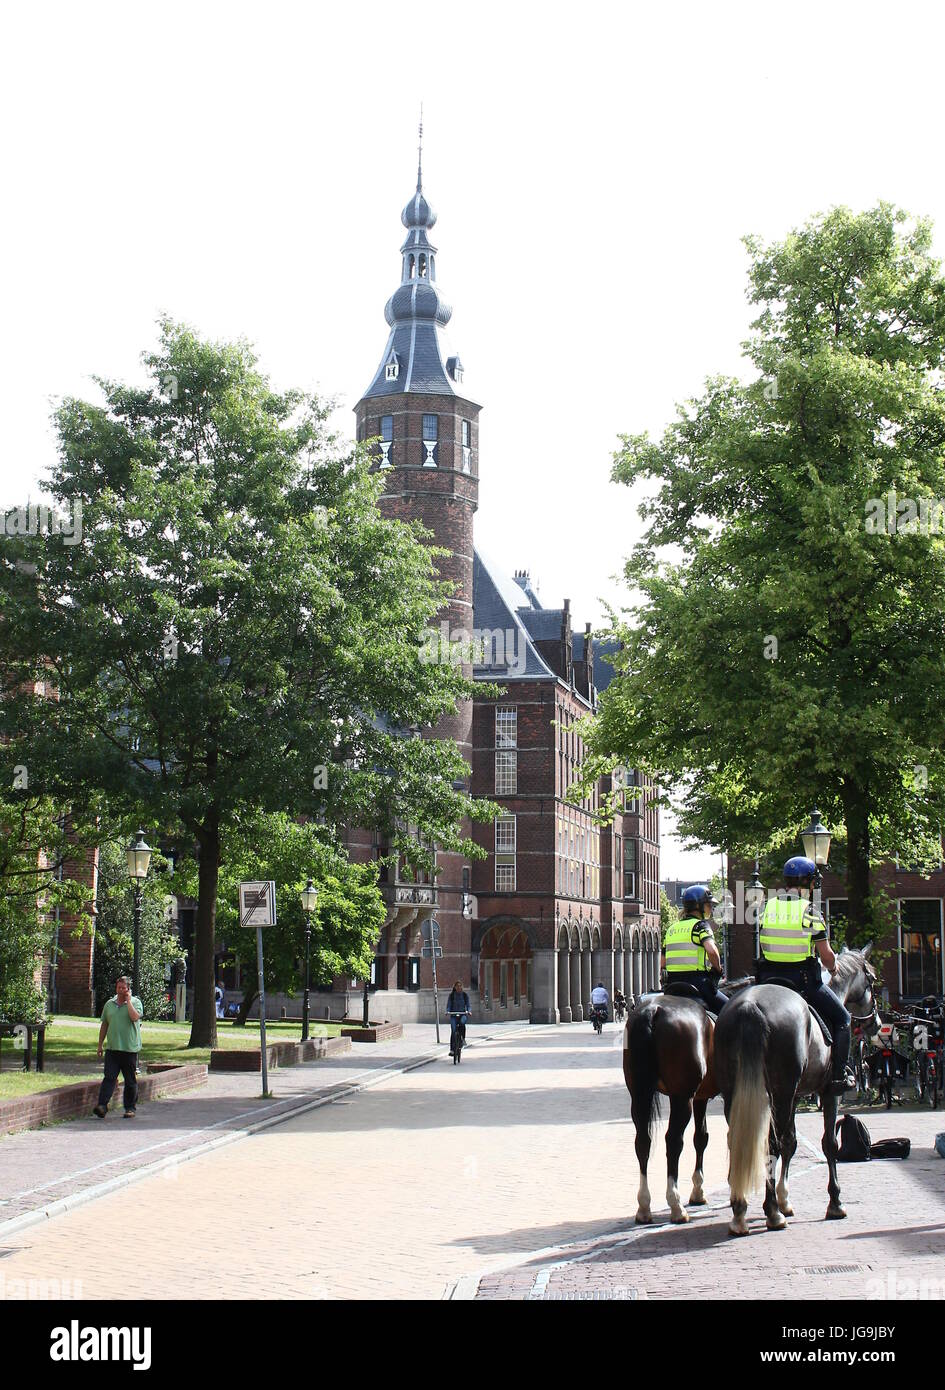 Dutch Policemen on horseback patrolling the streets of the inner city of Groningen, Netherlands at Martinikerkhof. Stock Photo